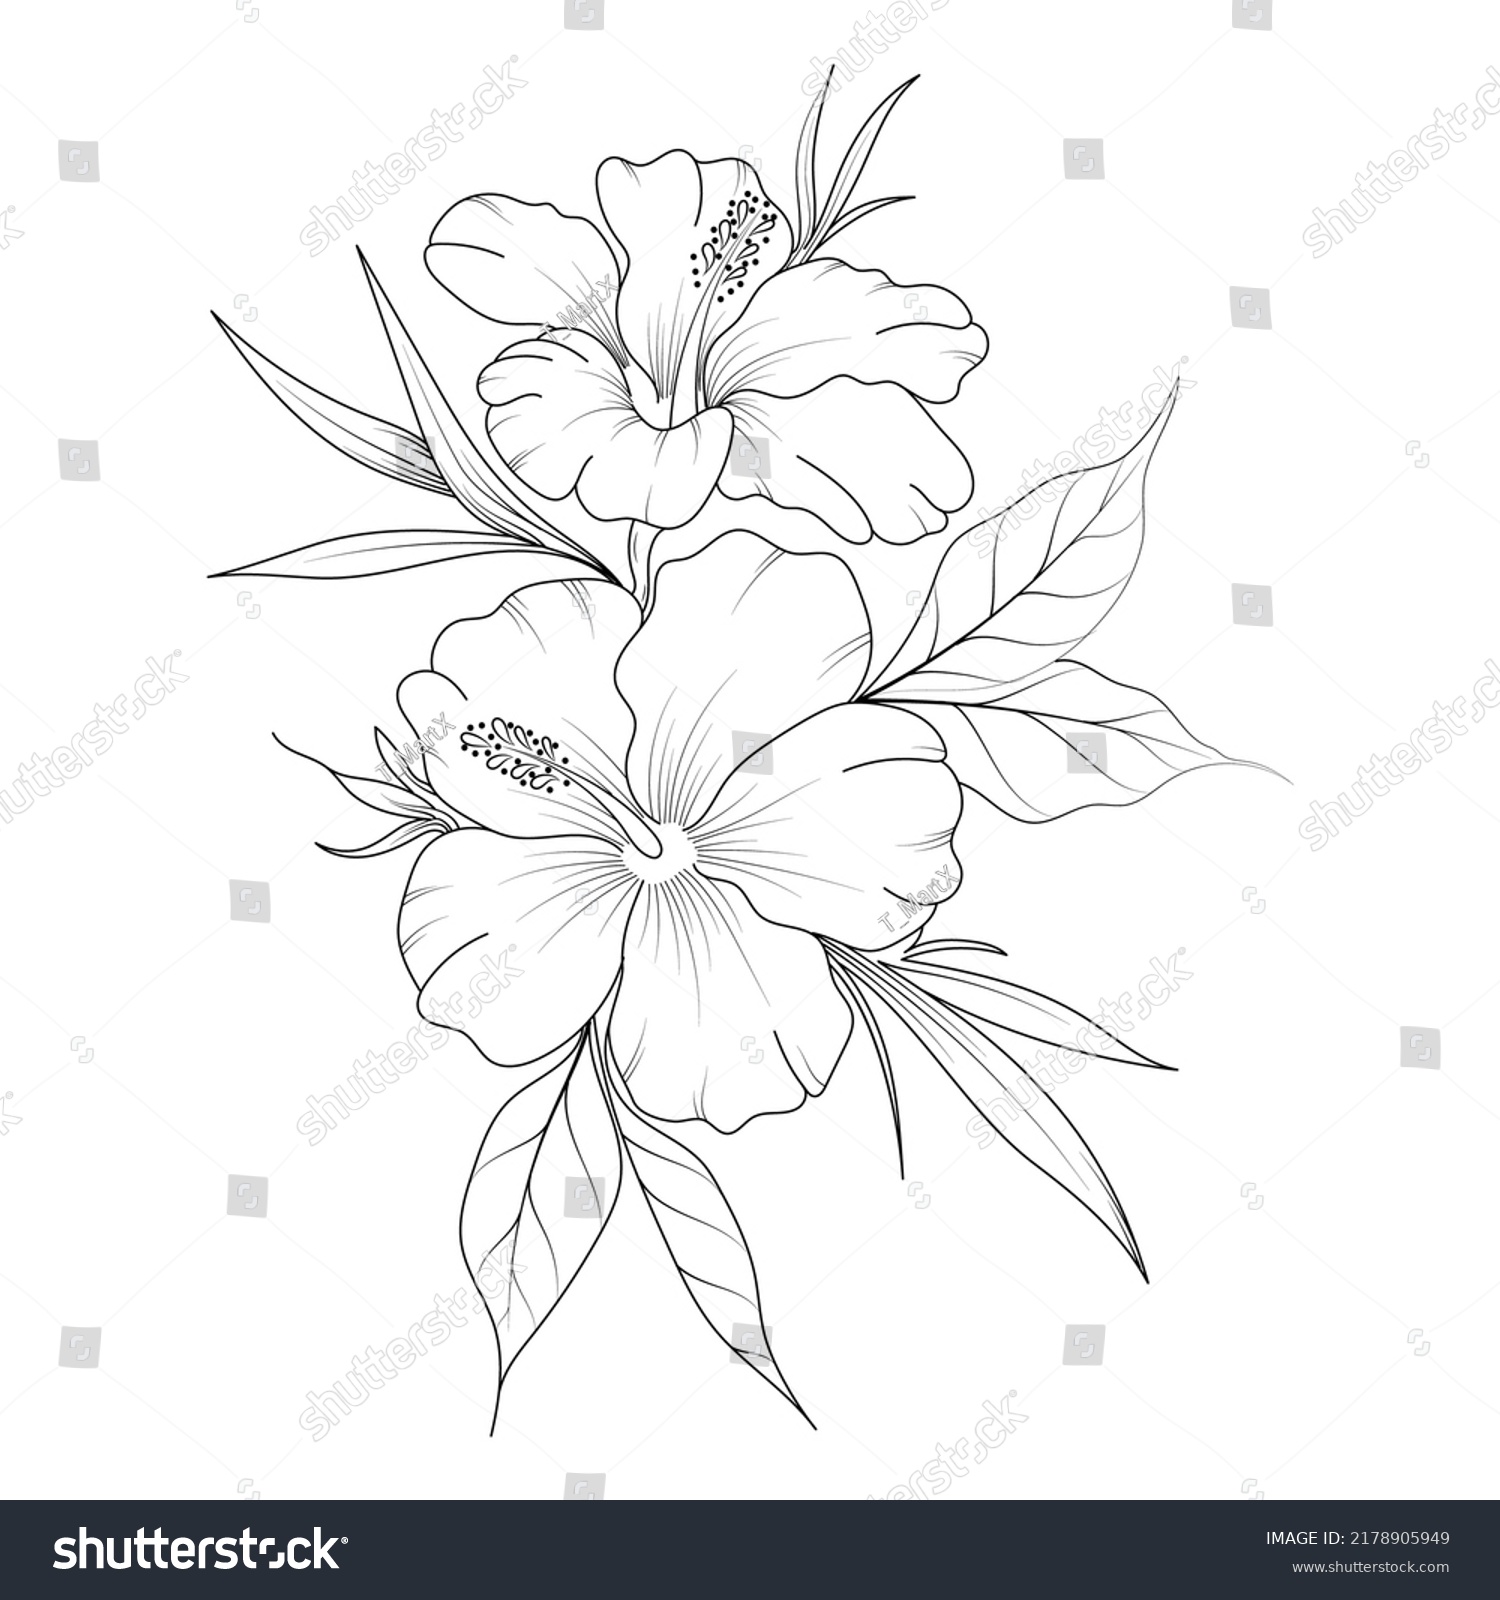 SVG of Flower Line art, Floral Illustration, Flower coloring page for kids and adults, Flower illustration in white background svg